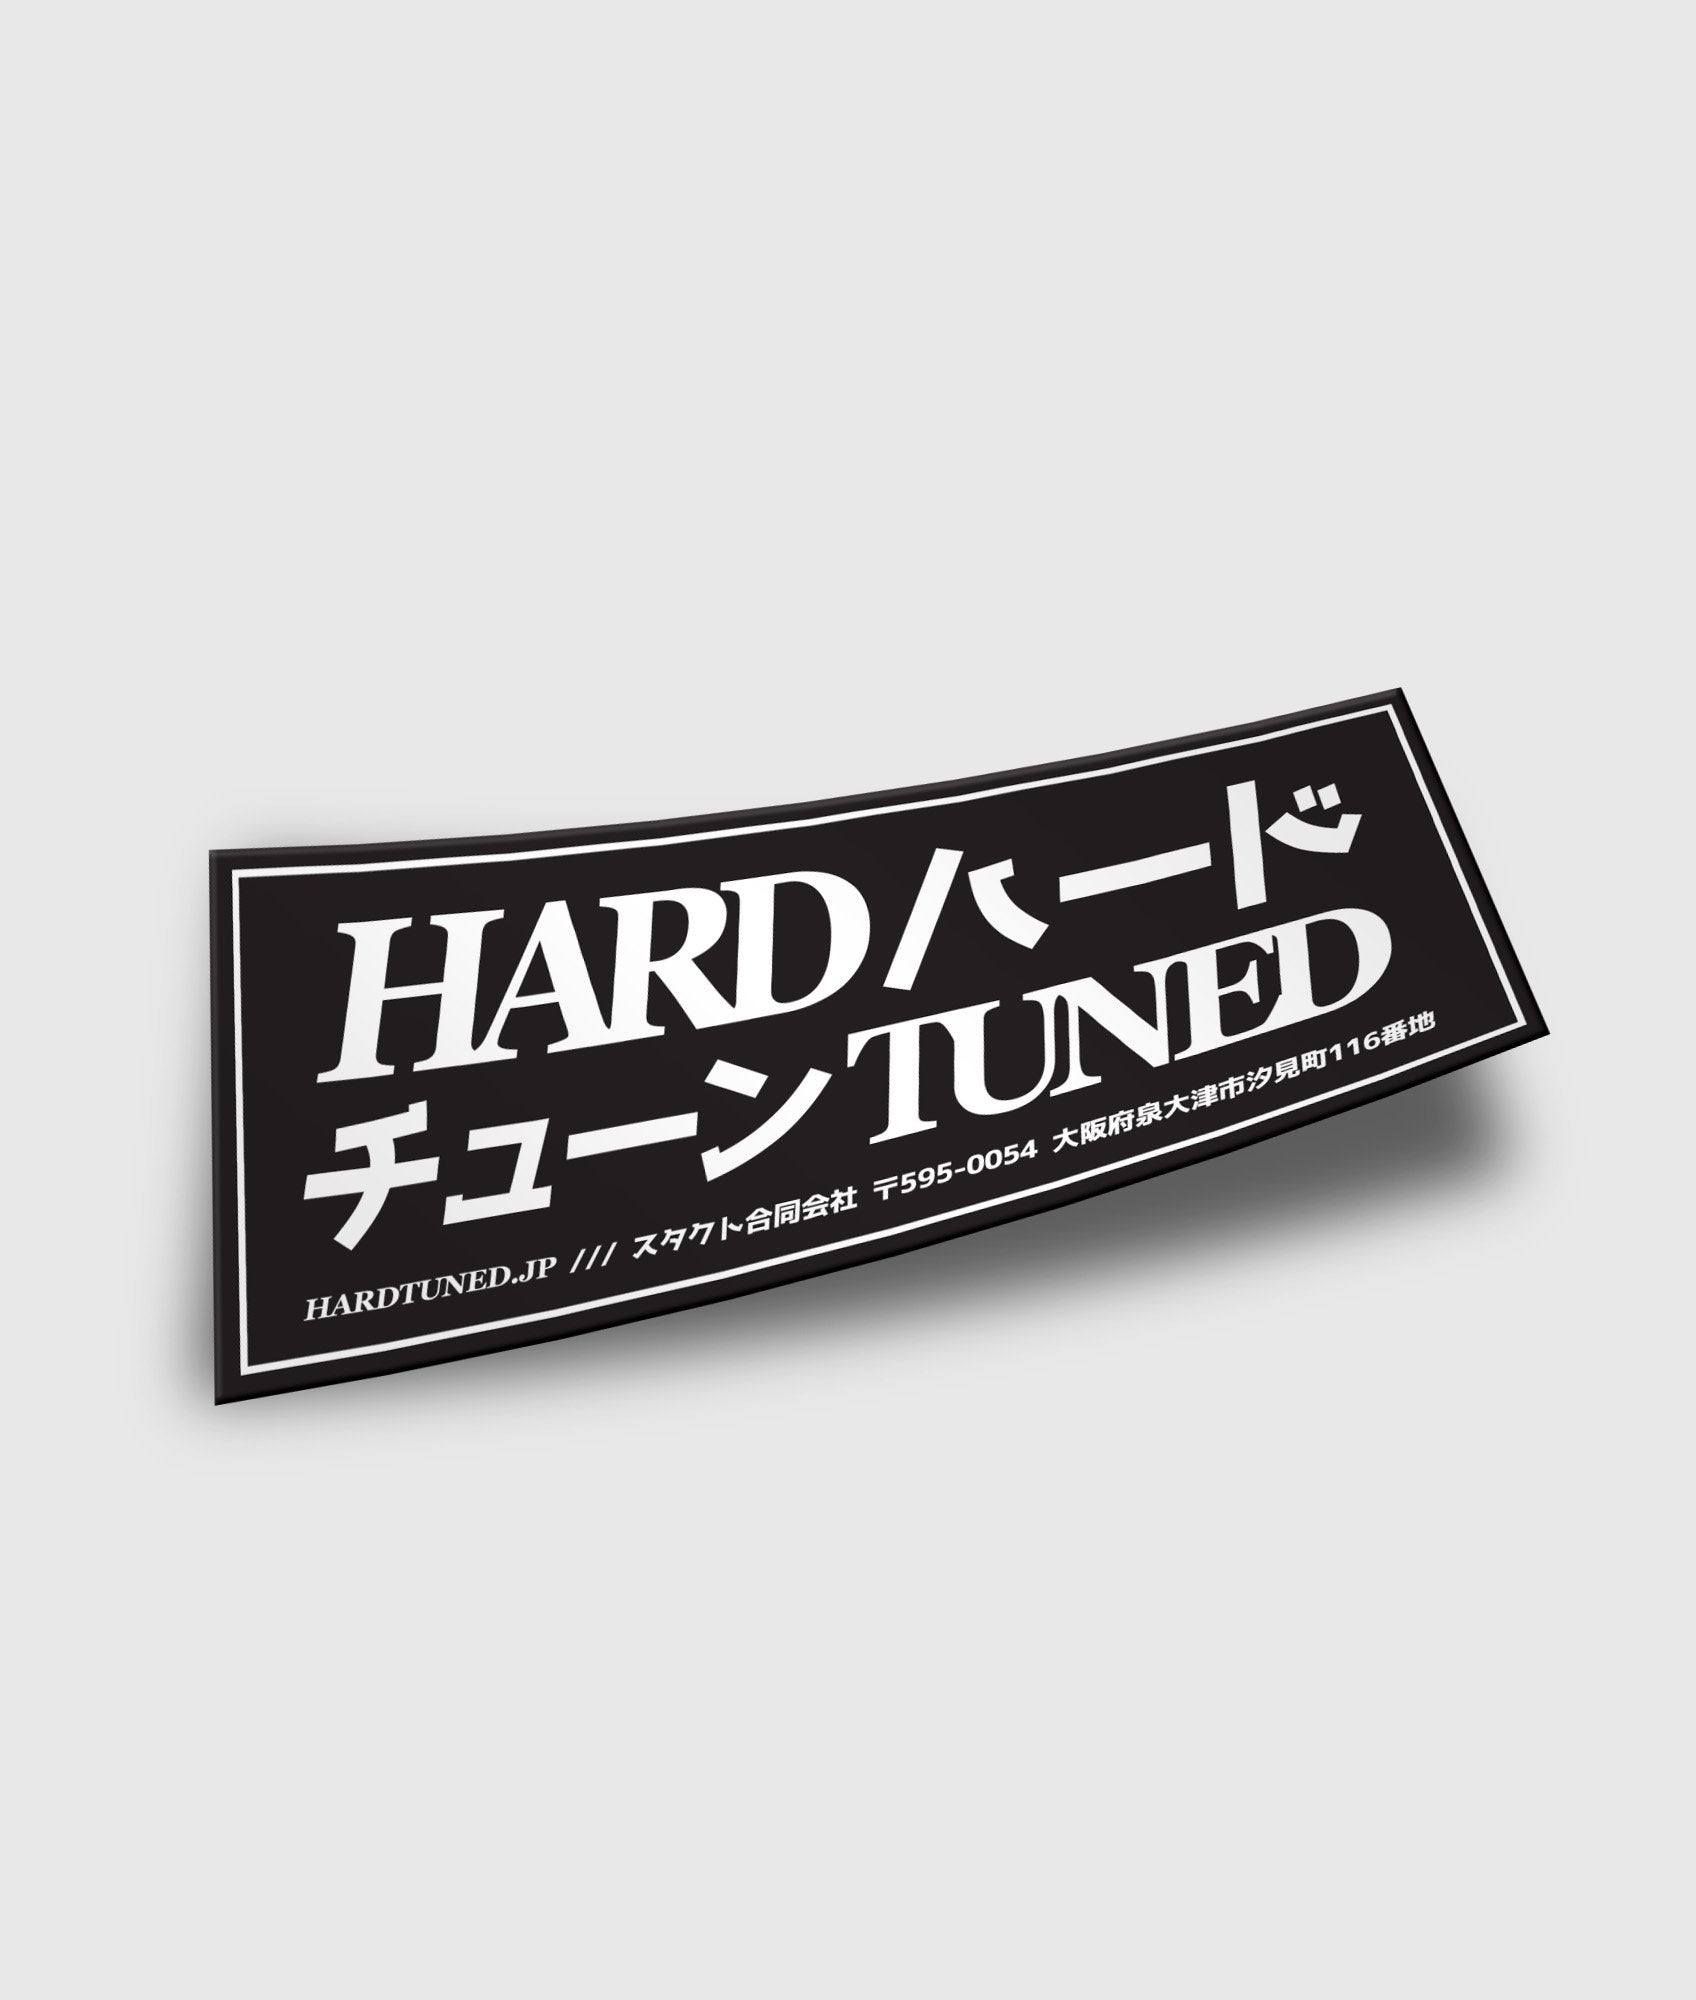 Hardtuned Classic JDM Drift Slap - Hardtuned